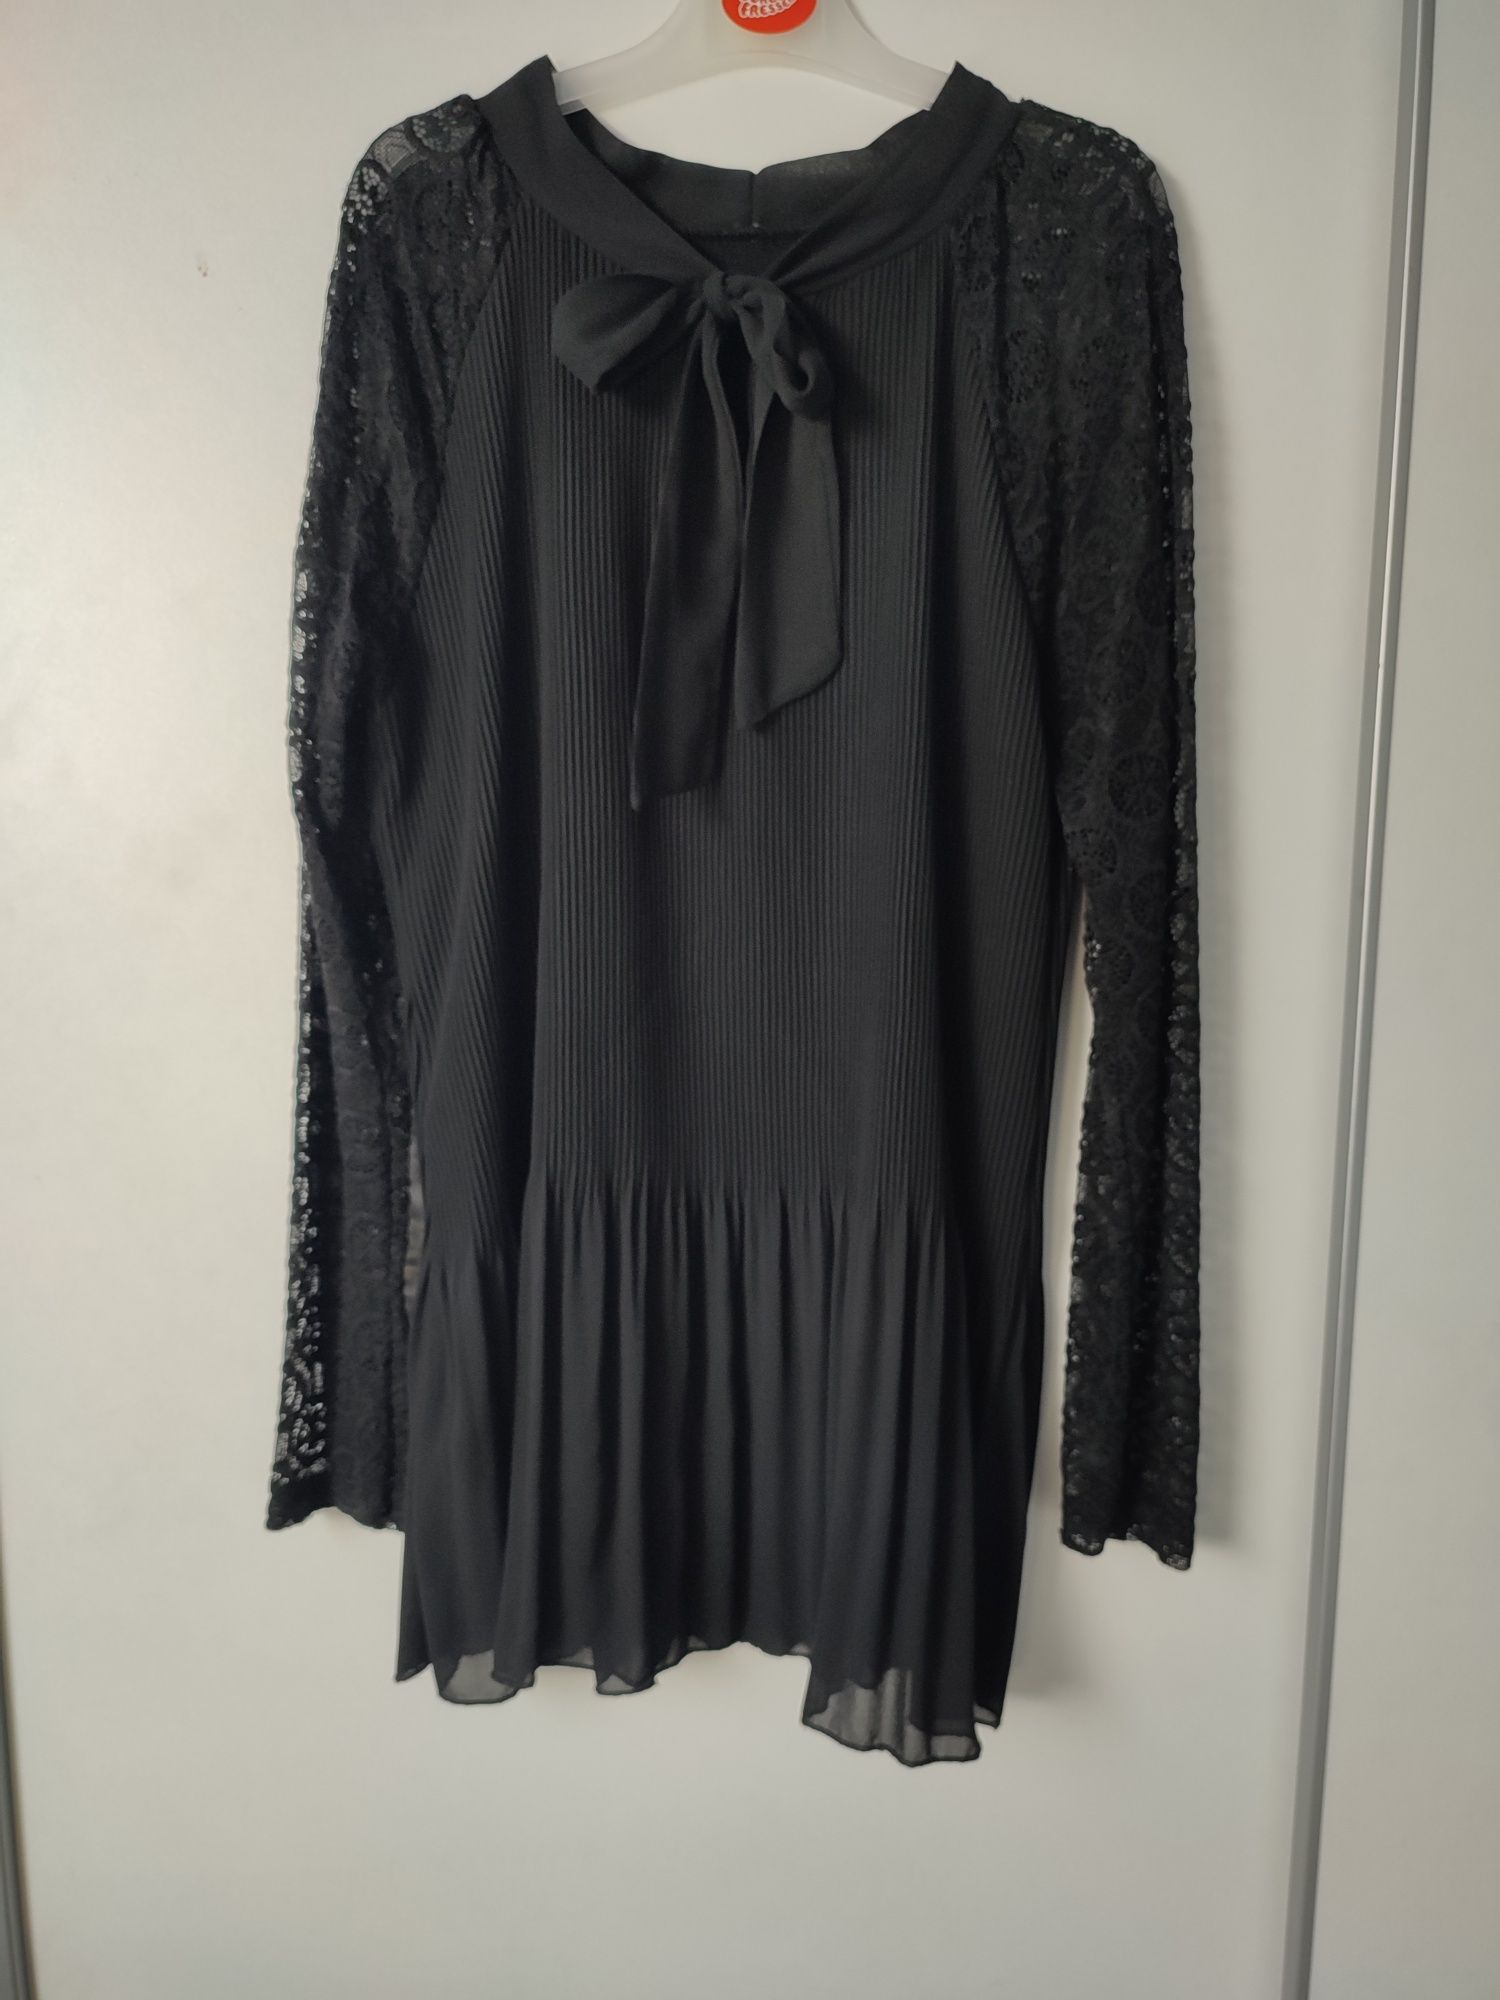 Bluzka 38 M elegancka damska plisowana czarna kokardą falbana baskinka